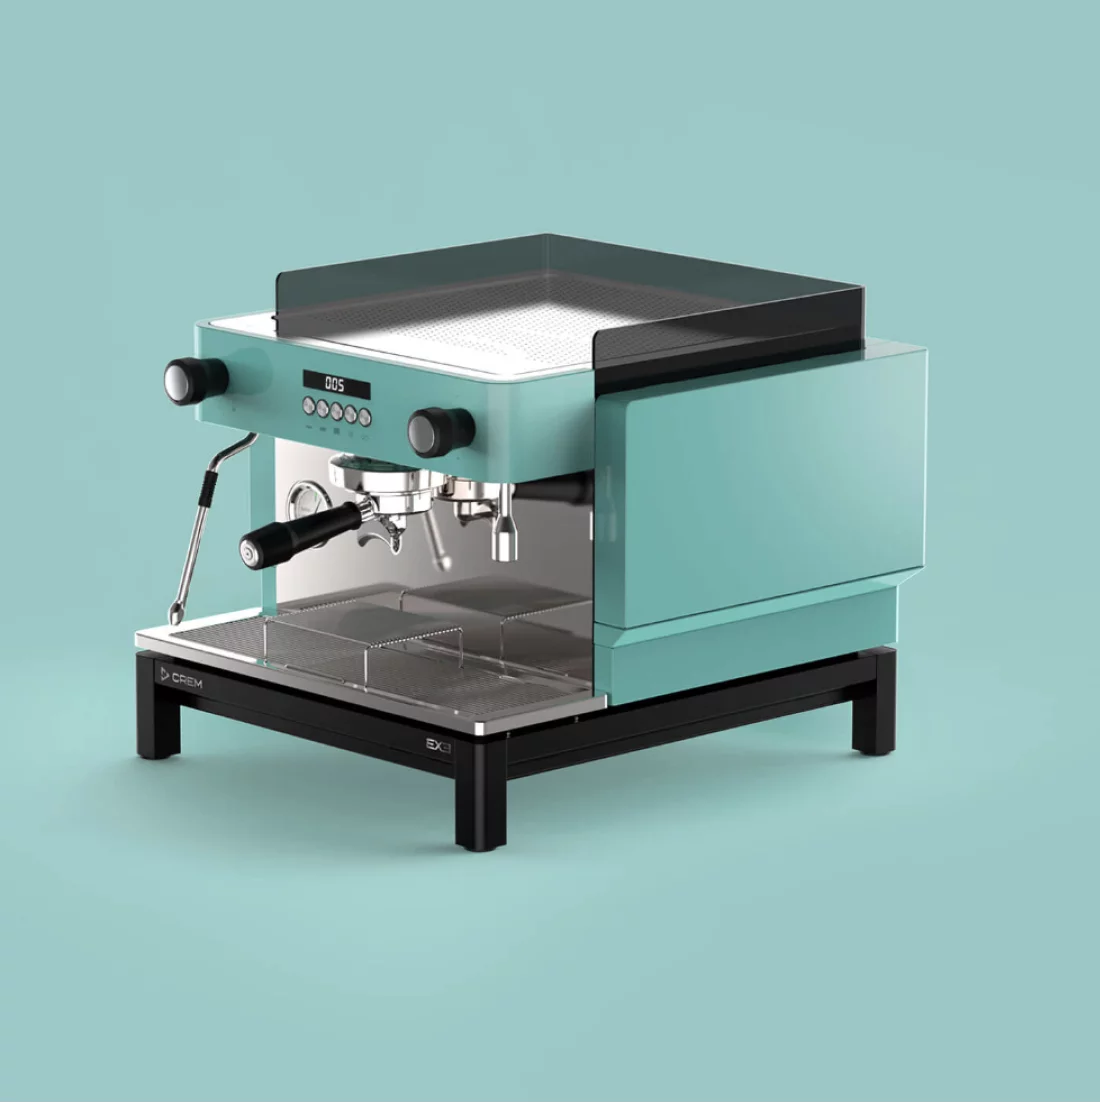 Coffee machine industrial design by Nacar for Crem